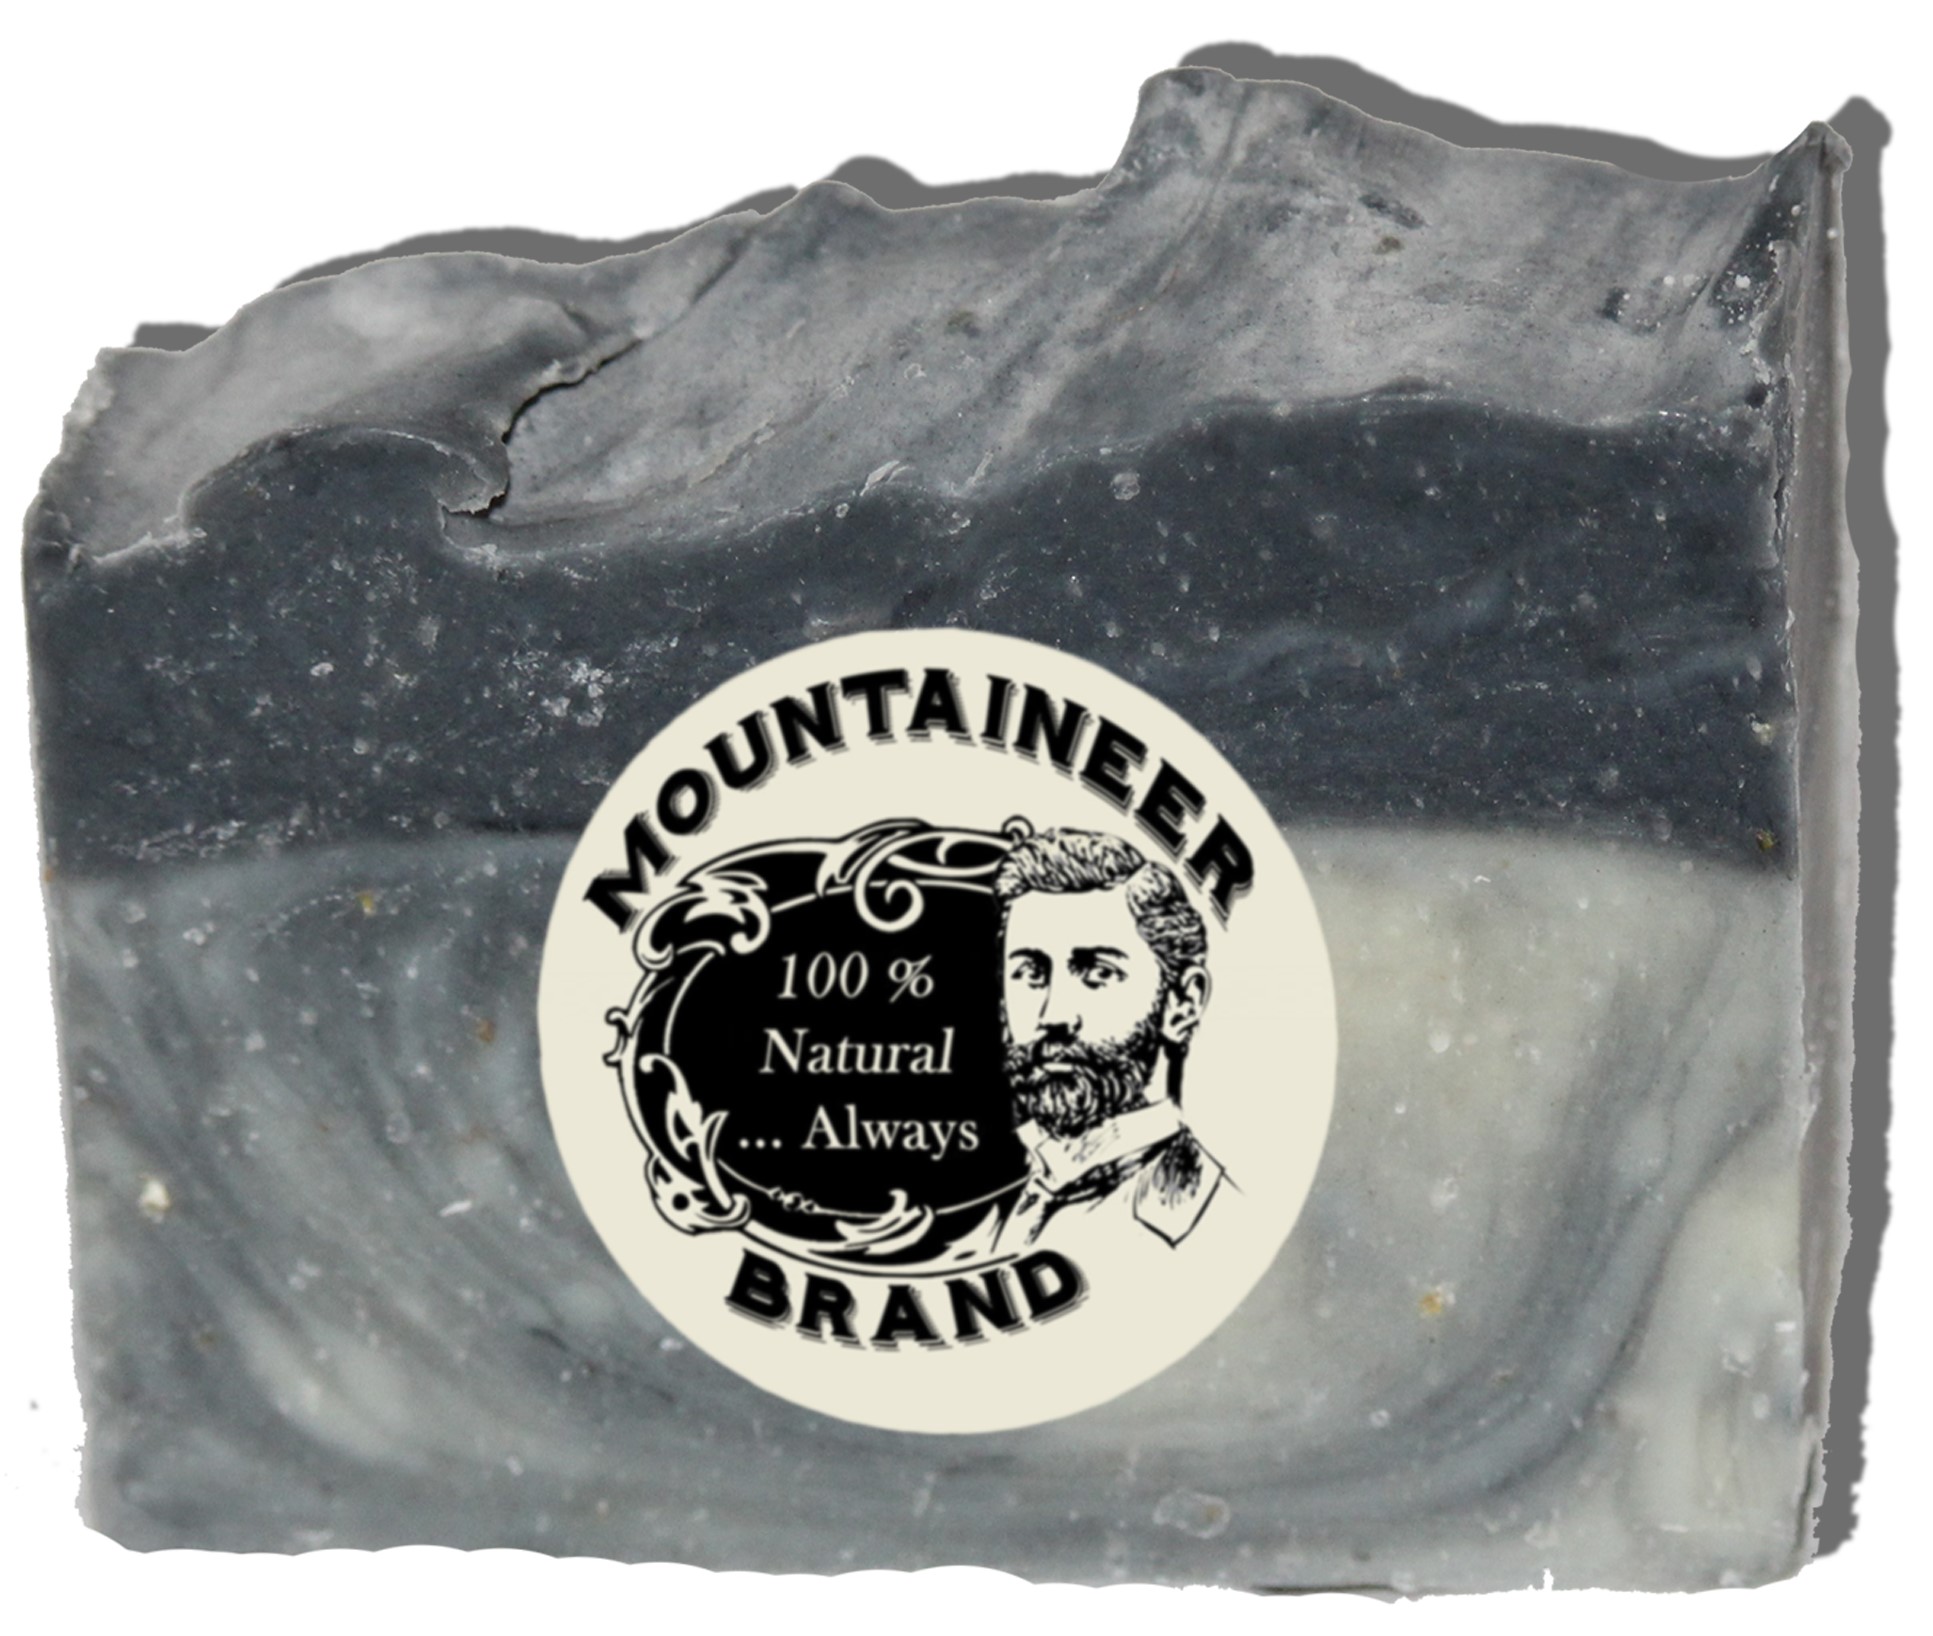 Mountaineer Brand Cedarwood Beer Shaving Soap